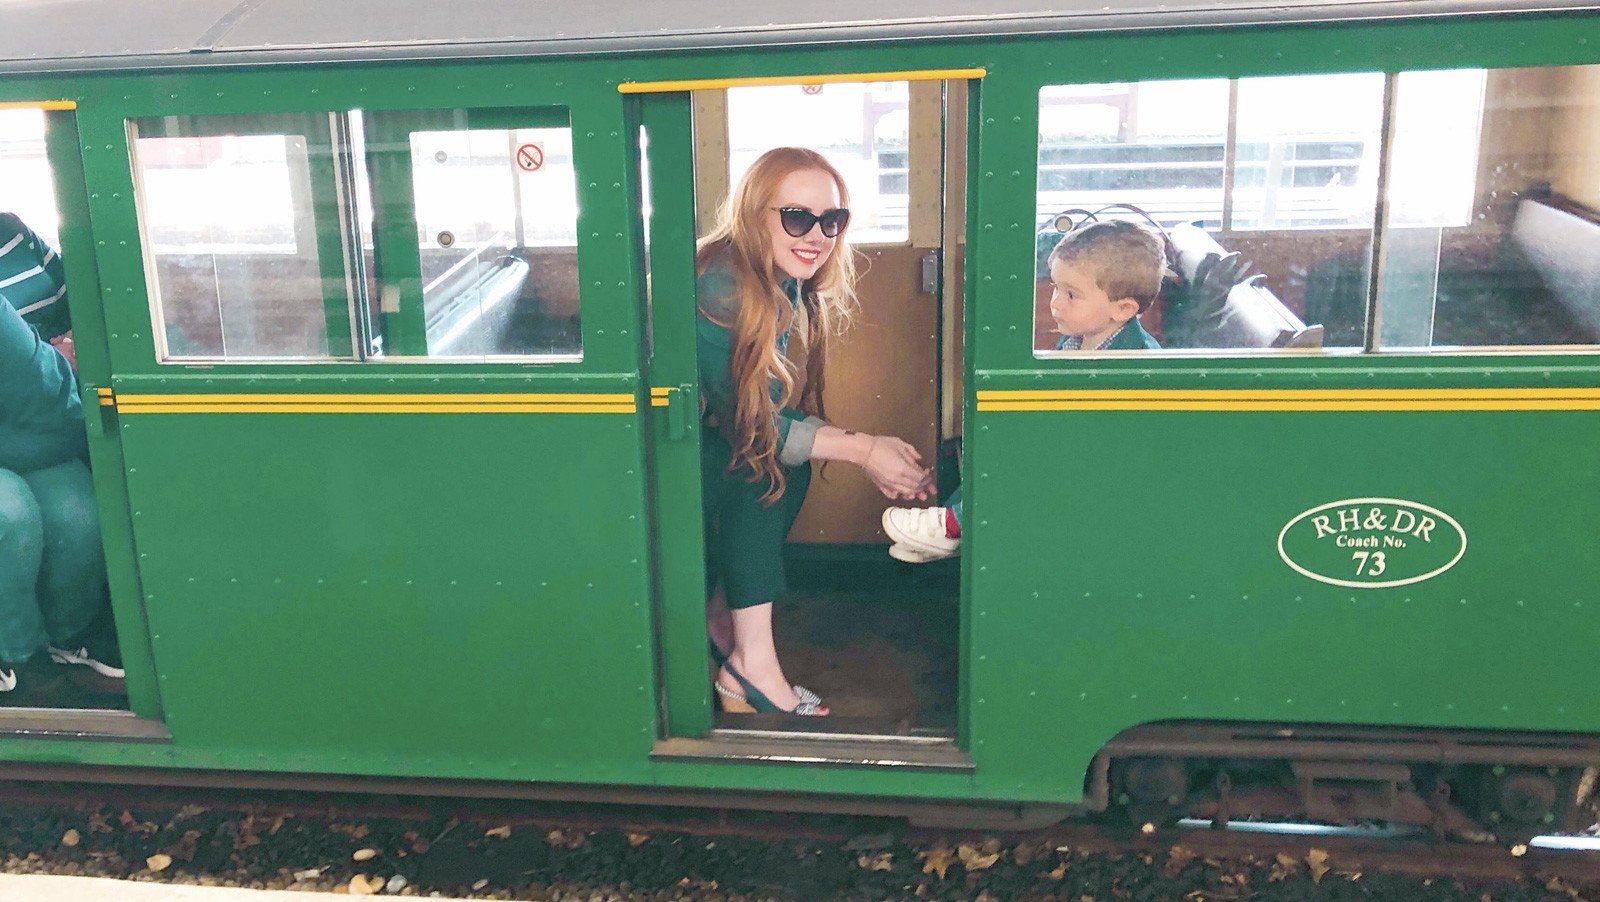 Romney, Hythe & Dymchurch Miniature Railway